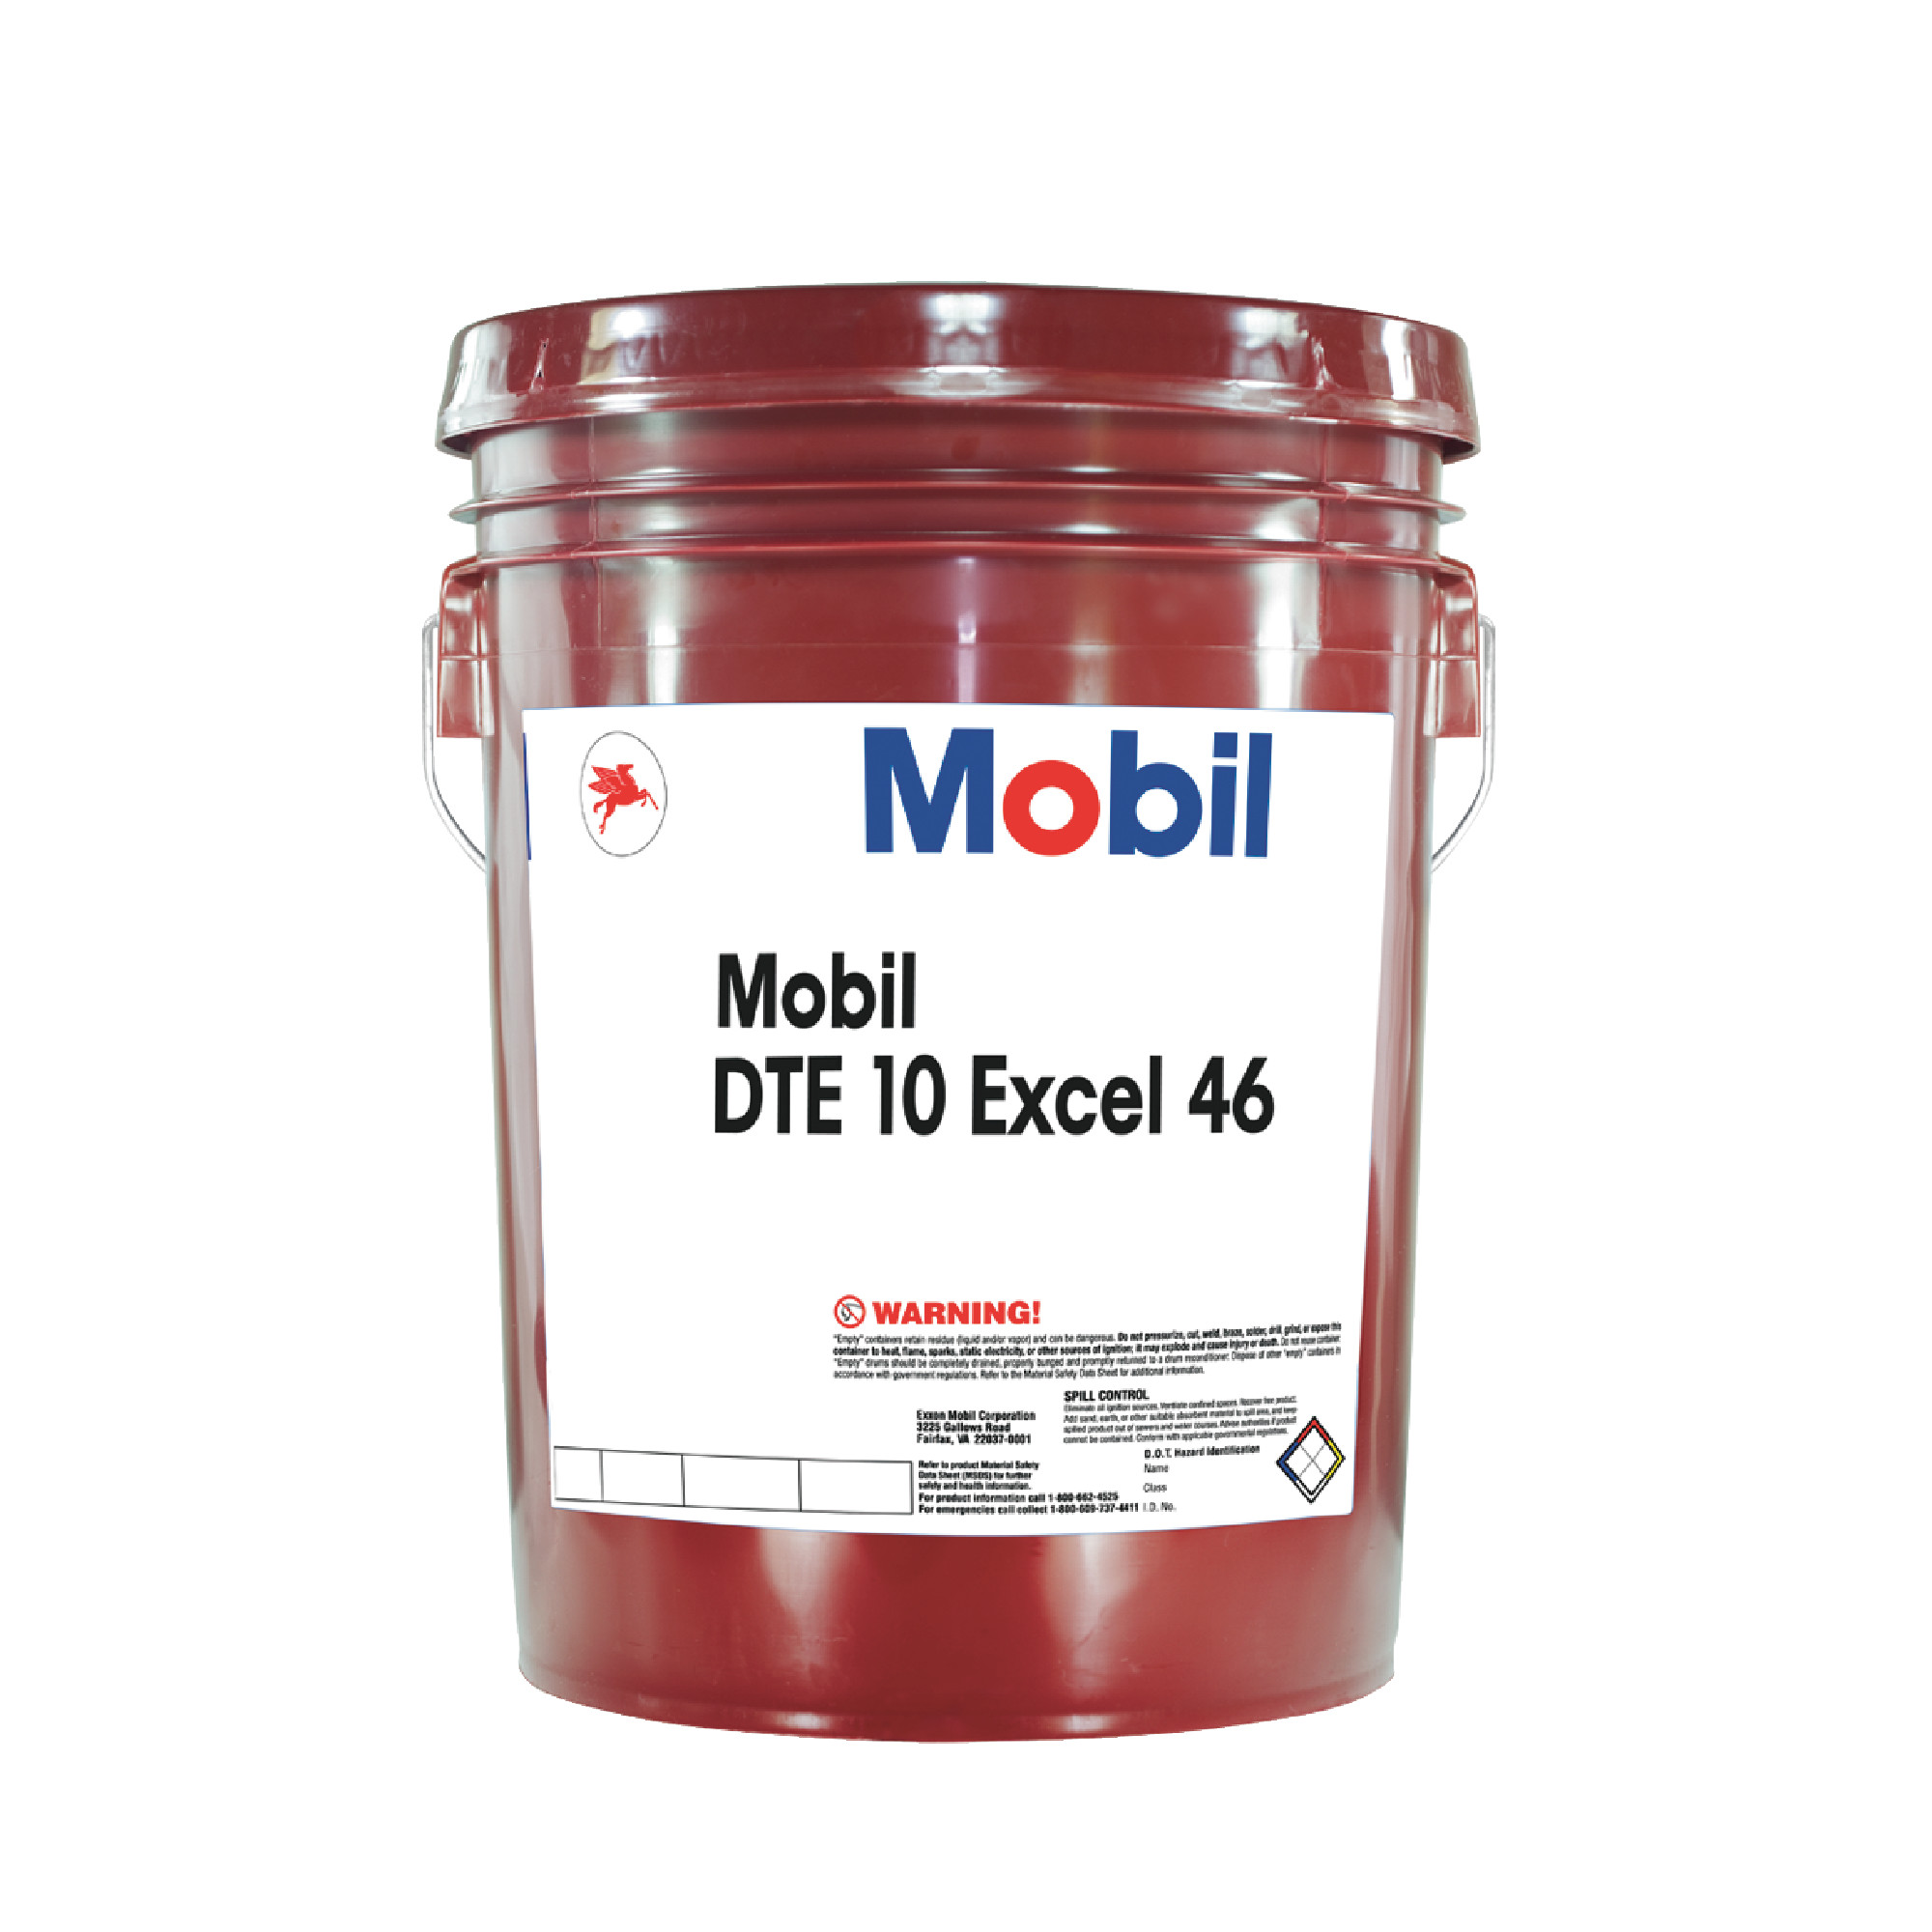 MOBIL DTE 10 EXCEL 46 5 Gallon Pail Hydraulic Fluid